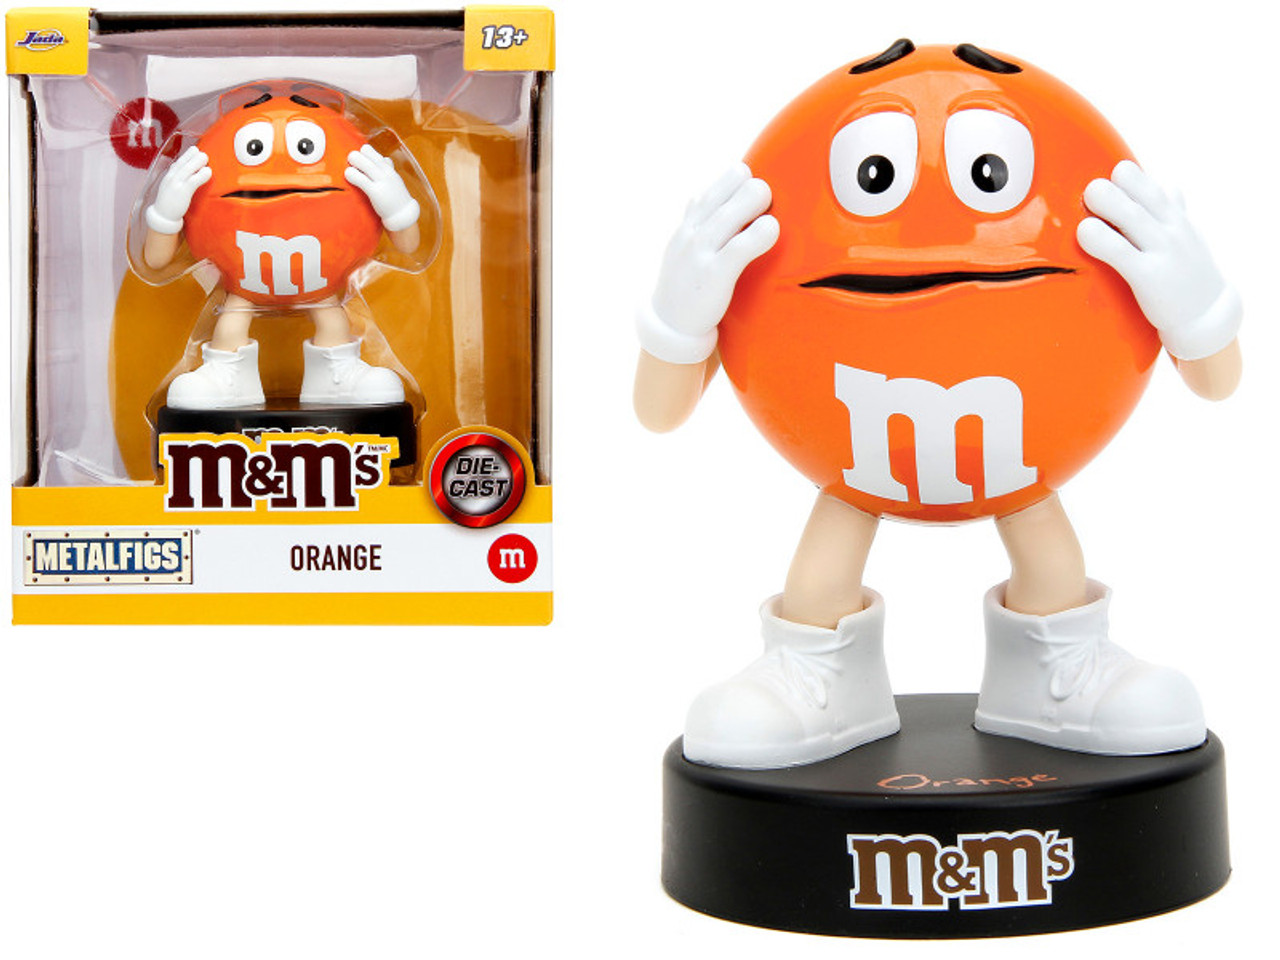 Orange M&M's 4" Diecast Figurine "Metalfigs" Series by Jada